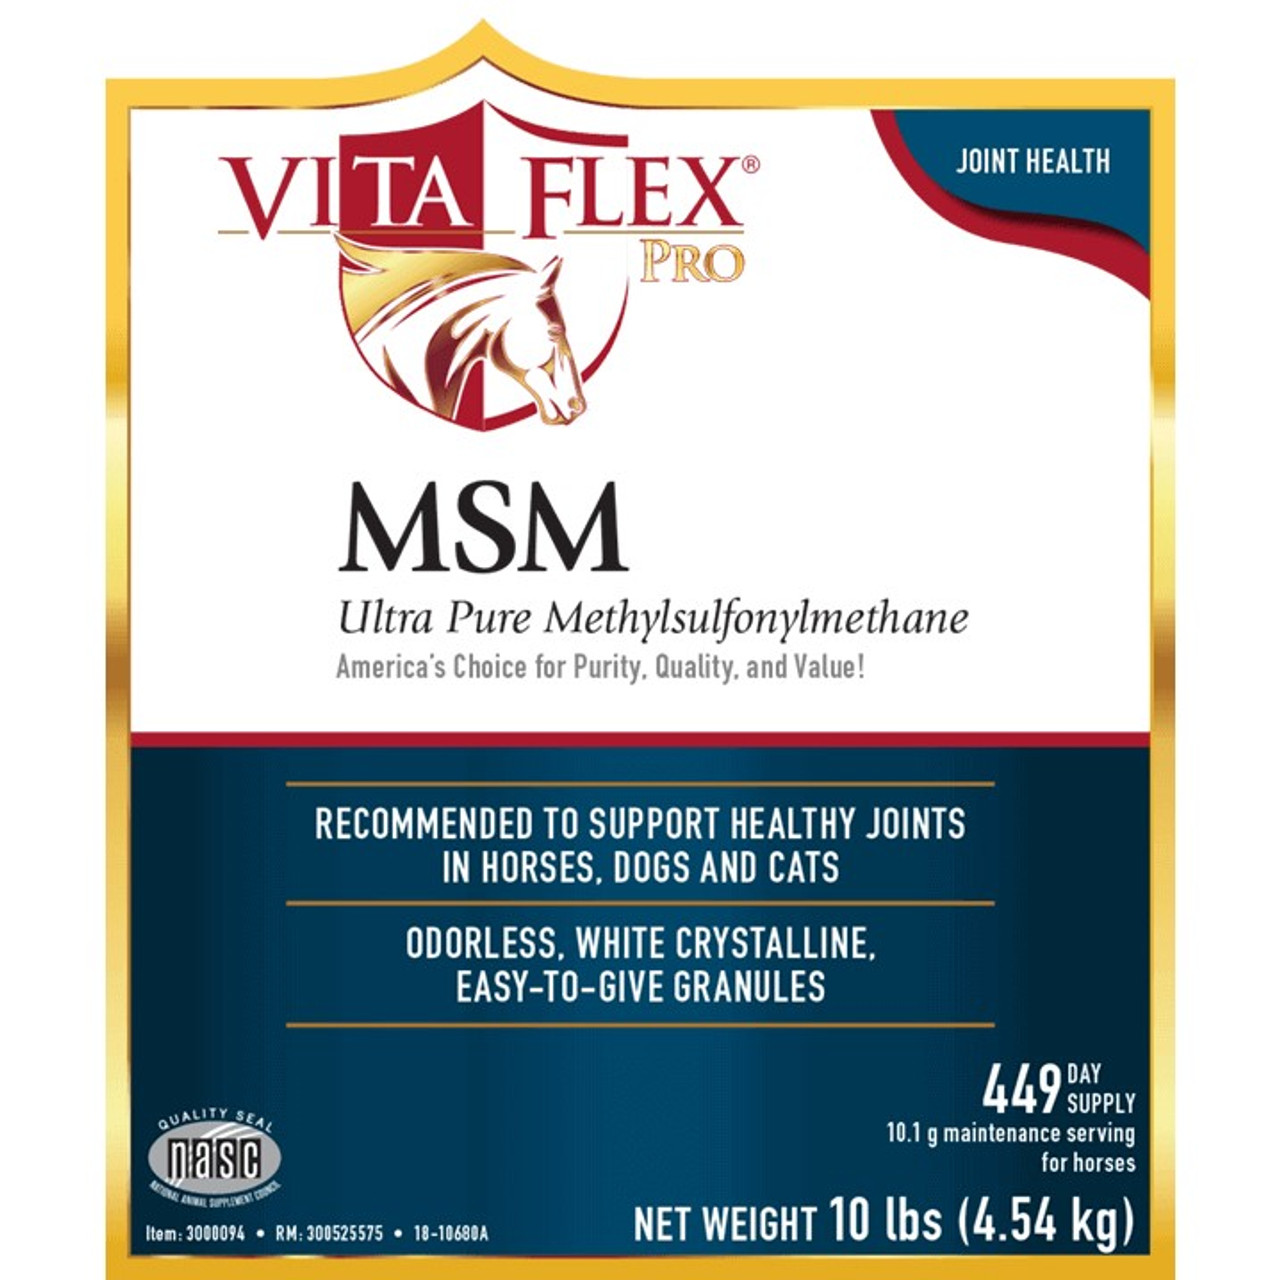 Vita Flex Pro MSM